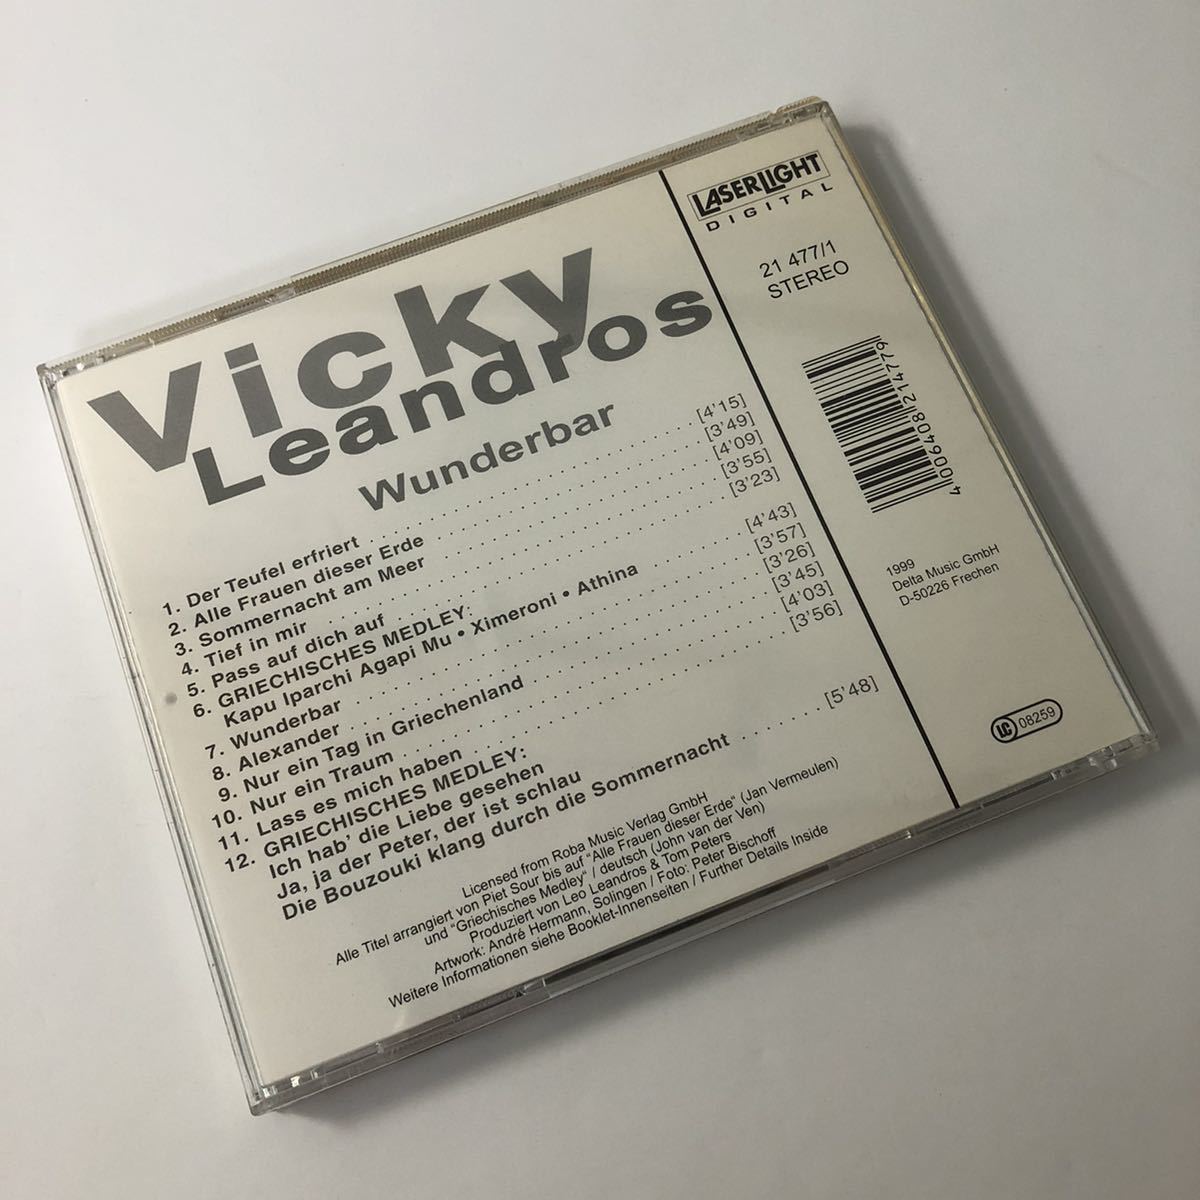 220225□Q05□ドイツ盤 CD「Vicky Leandros Wunderbar」_画像2